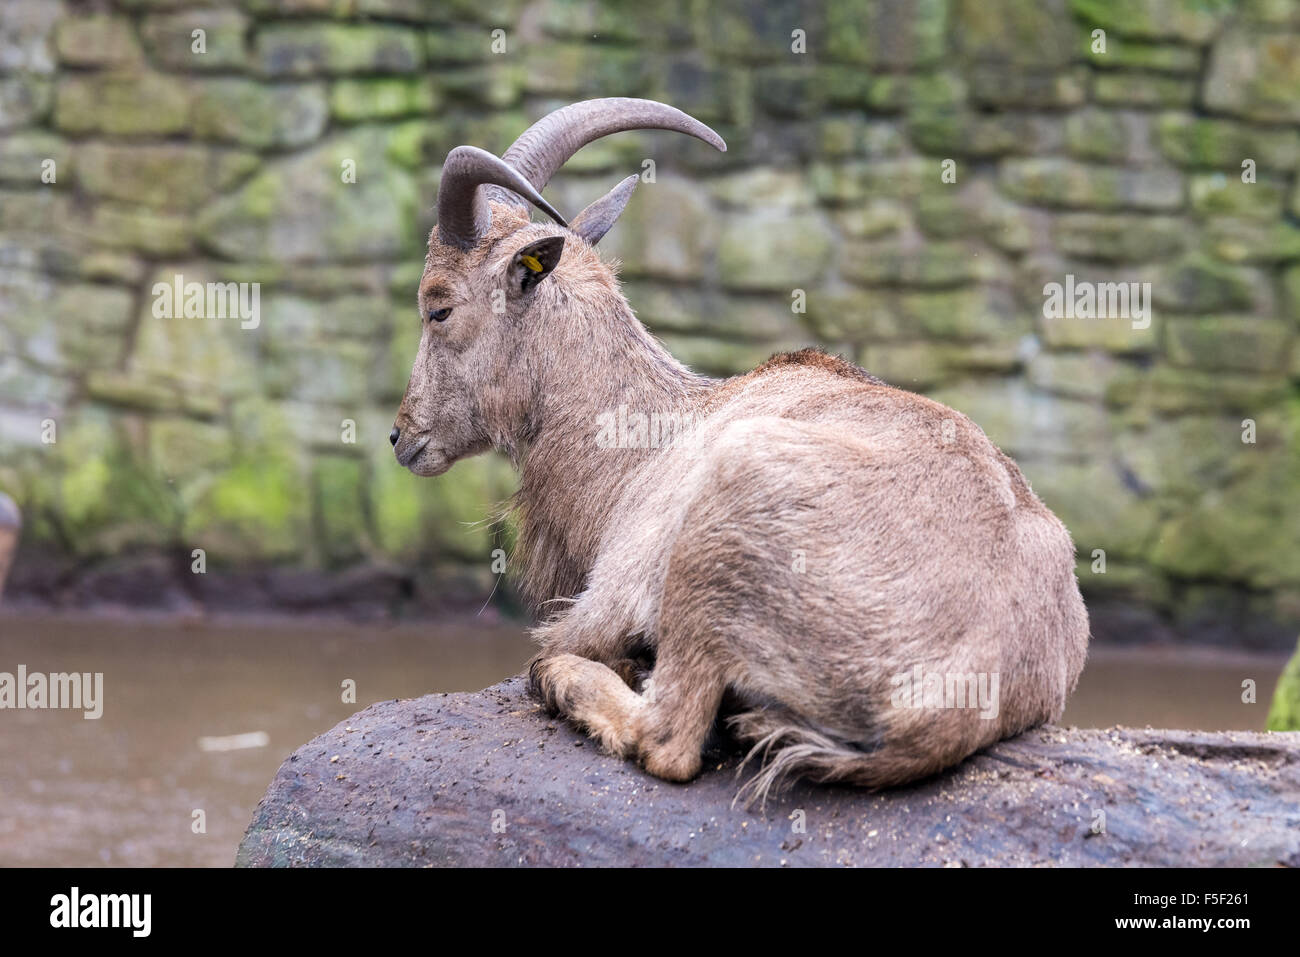 Barbary sheep at Dudley Zoo West Midlands UK Stock Photo